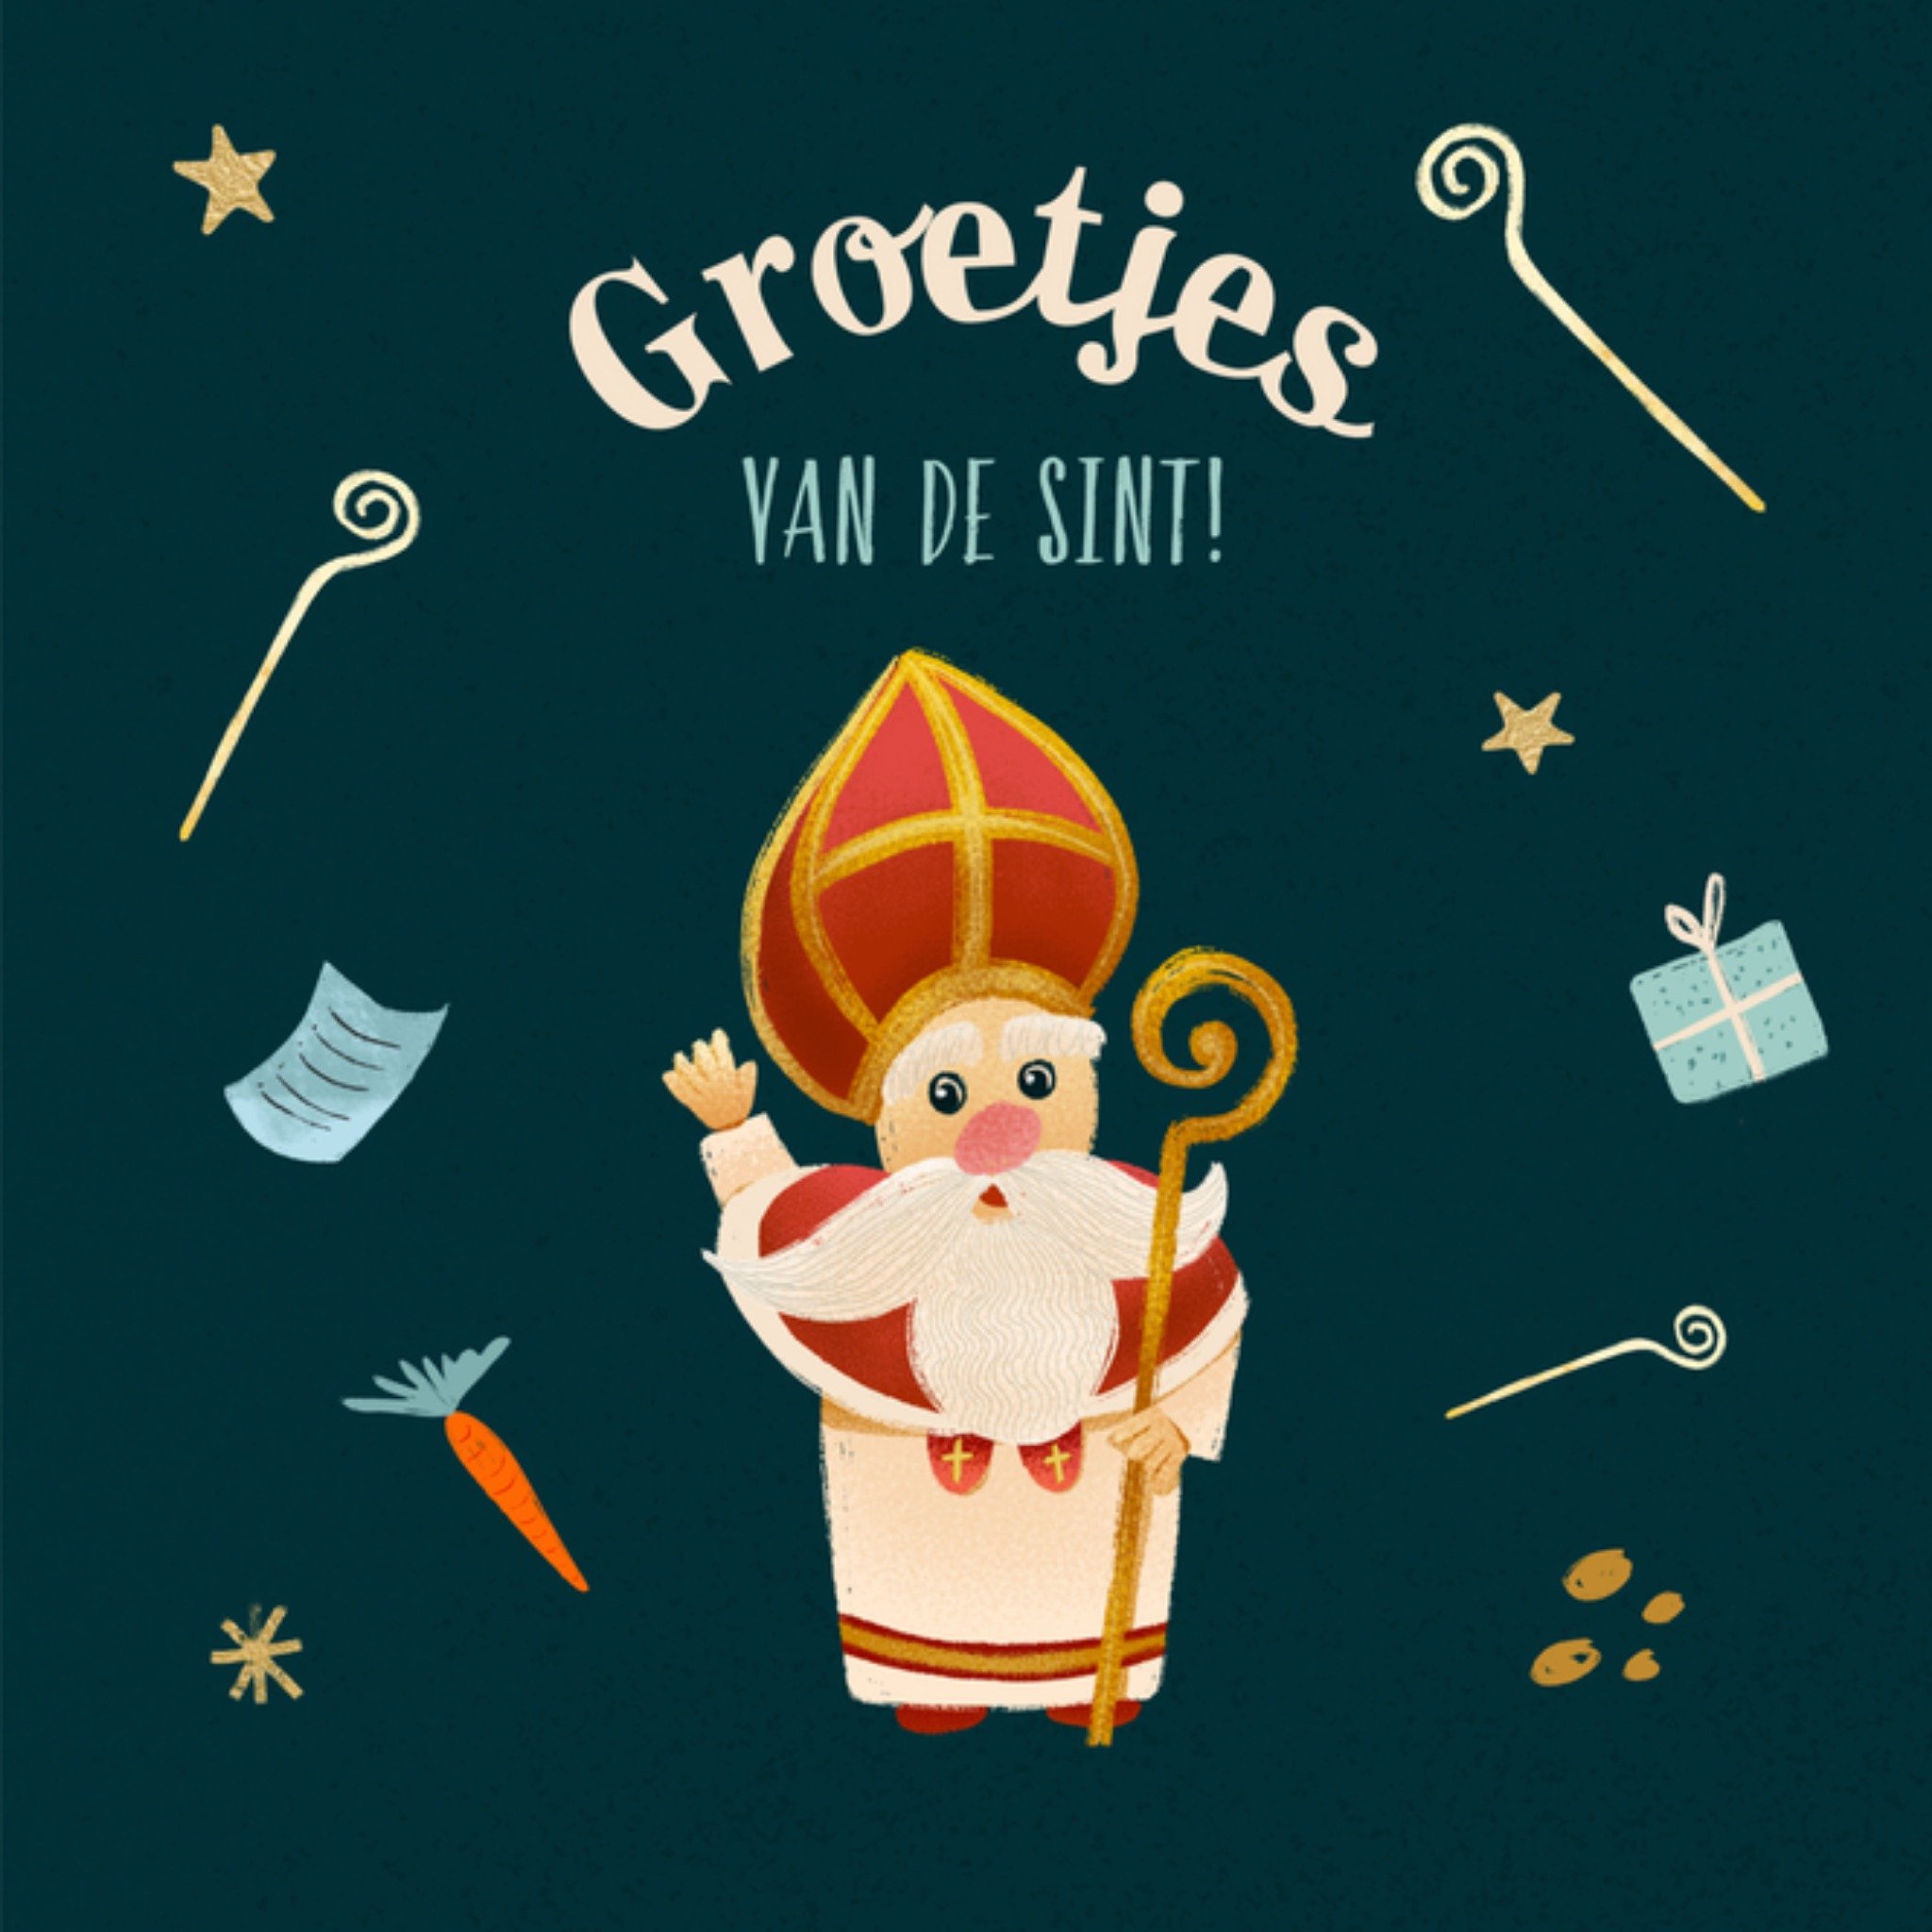 Greetz - Sinterklaaskaart - groetjes - illustratie